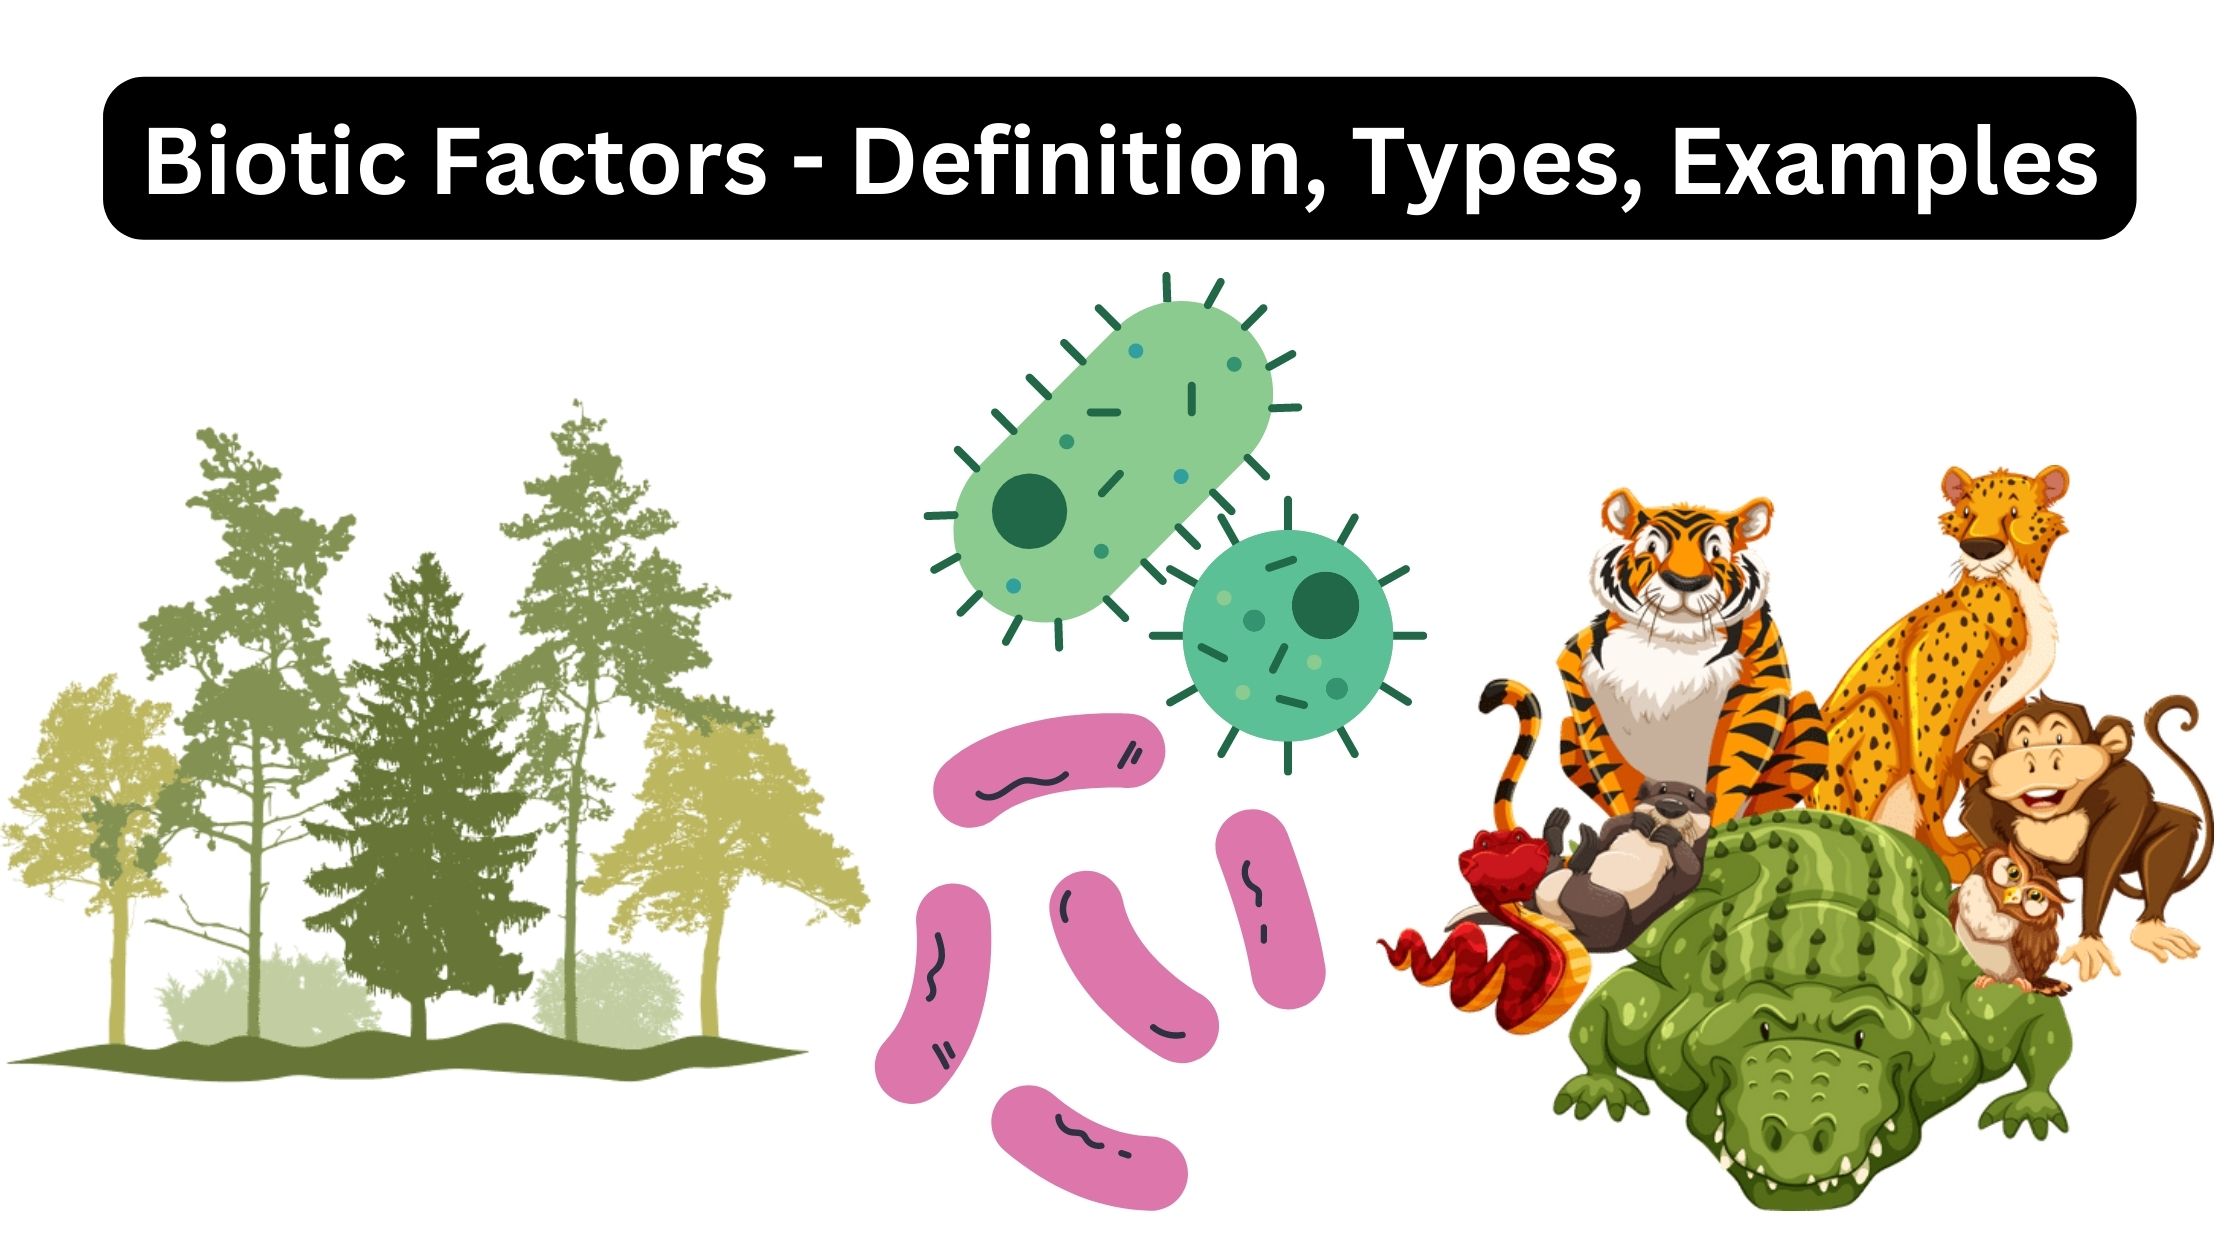 Biotic Factors - Definition, Types, Examples